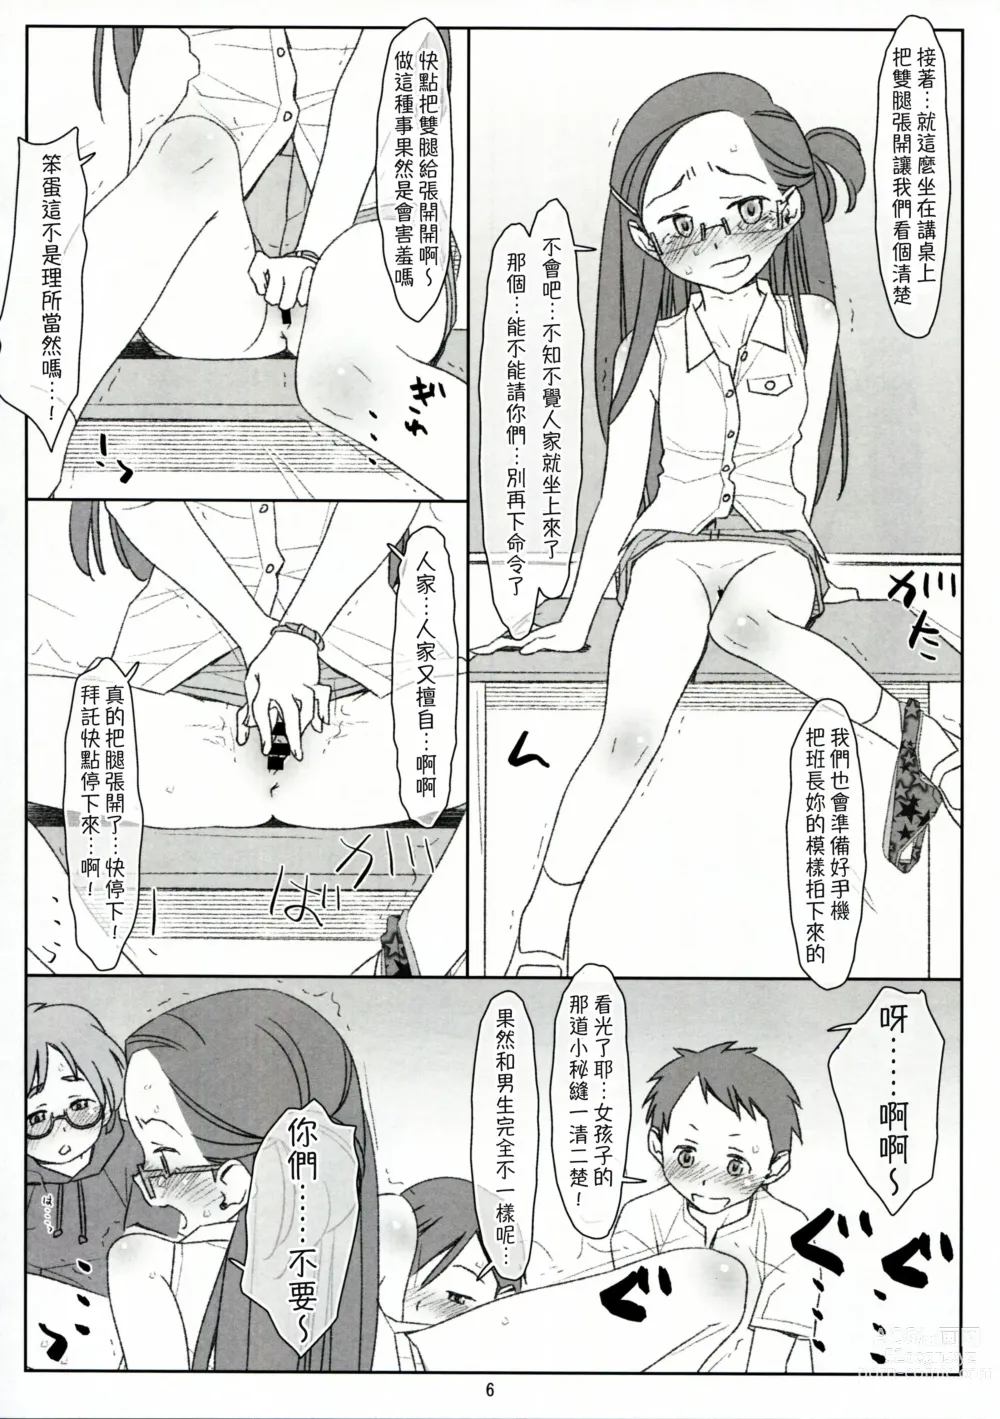 Page 6 of doujinshi Bokutachi no Super App + ②